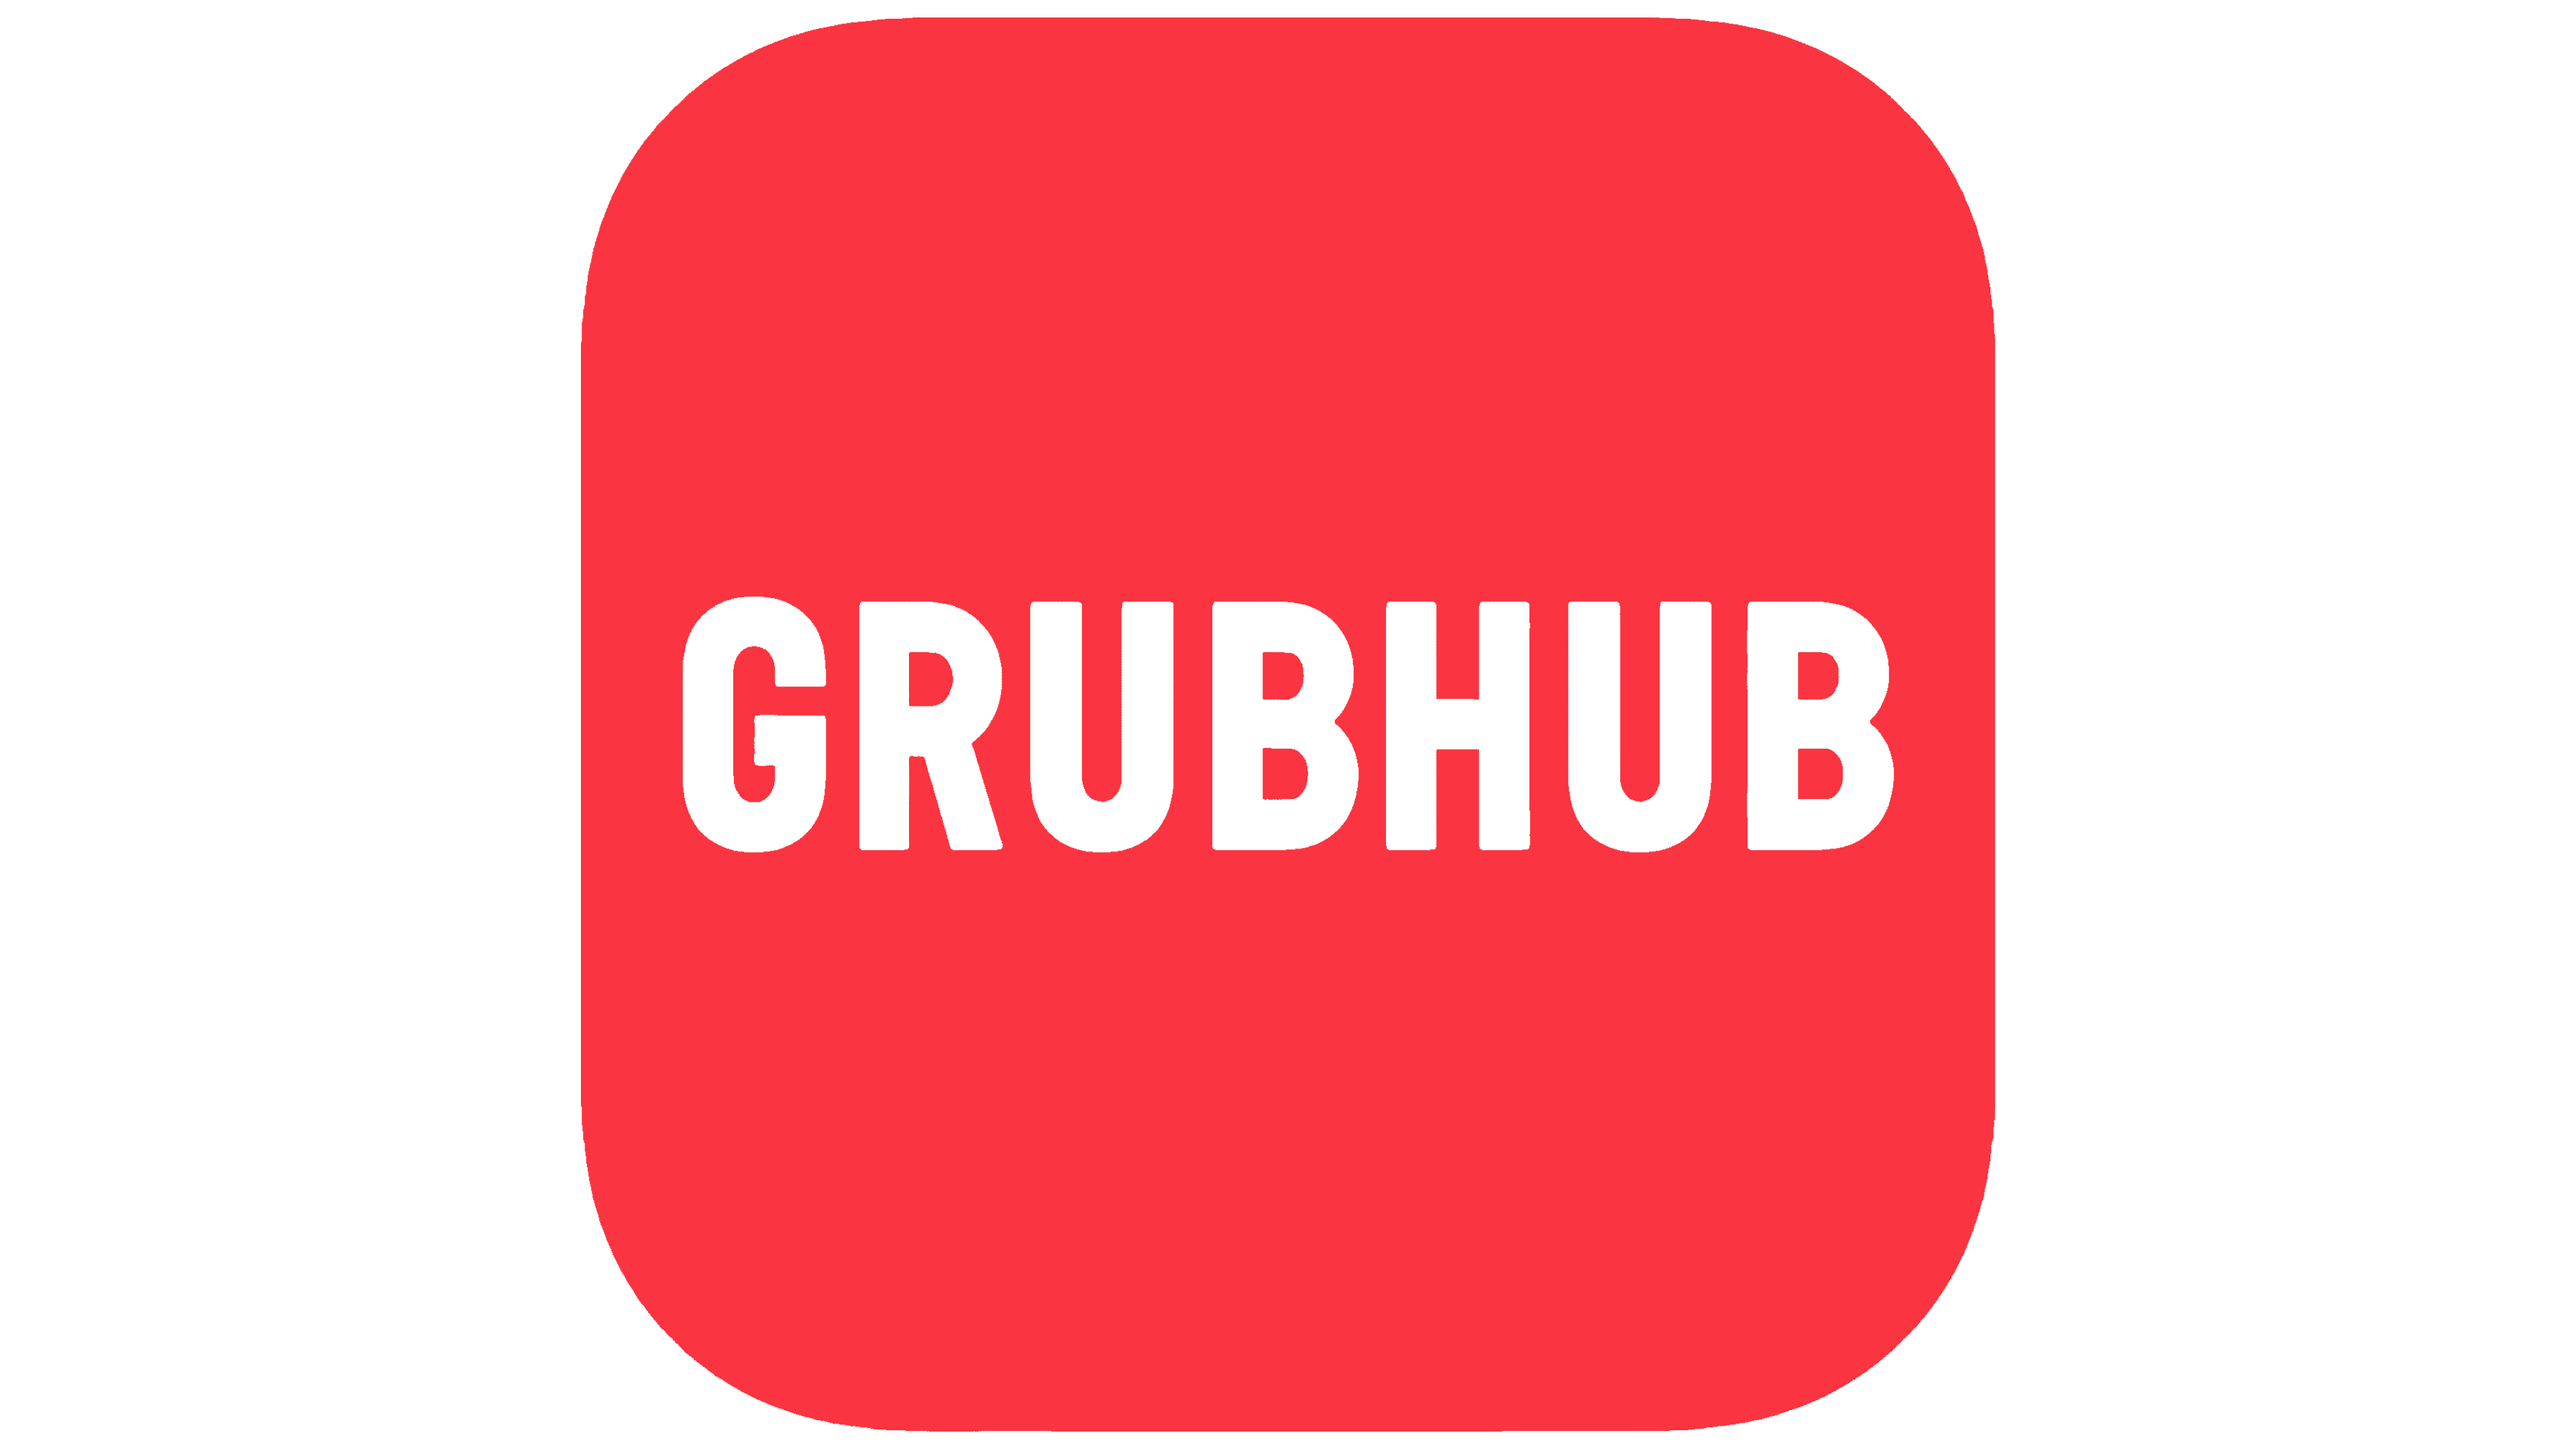 Grubhub Logo, symbol, meaning, history, PNG, brand